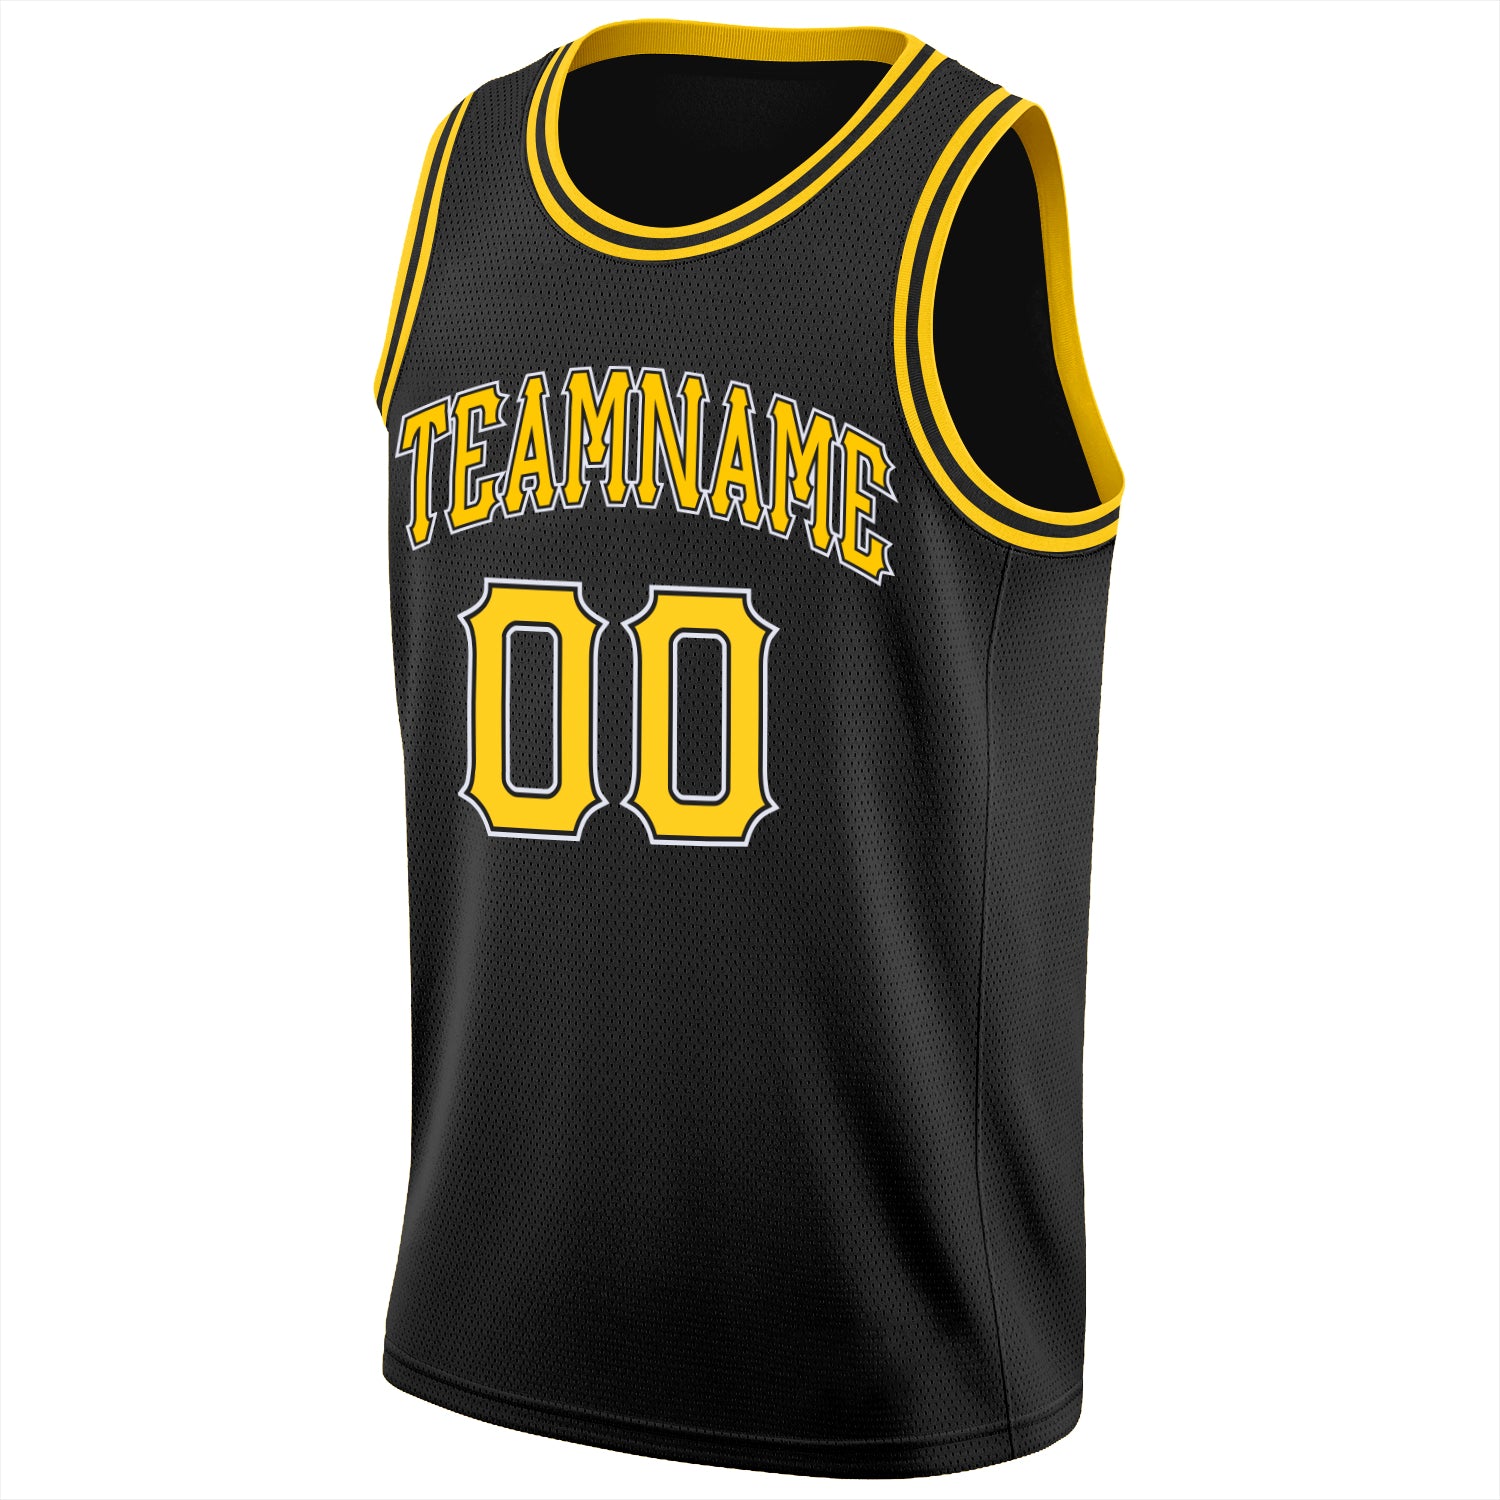 Wholesale Black gold basketball jerseys hot sell basketball wear uniform  wholesale stock sports vest From m.